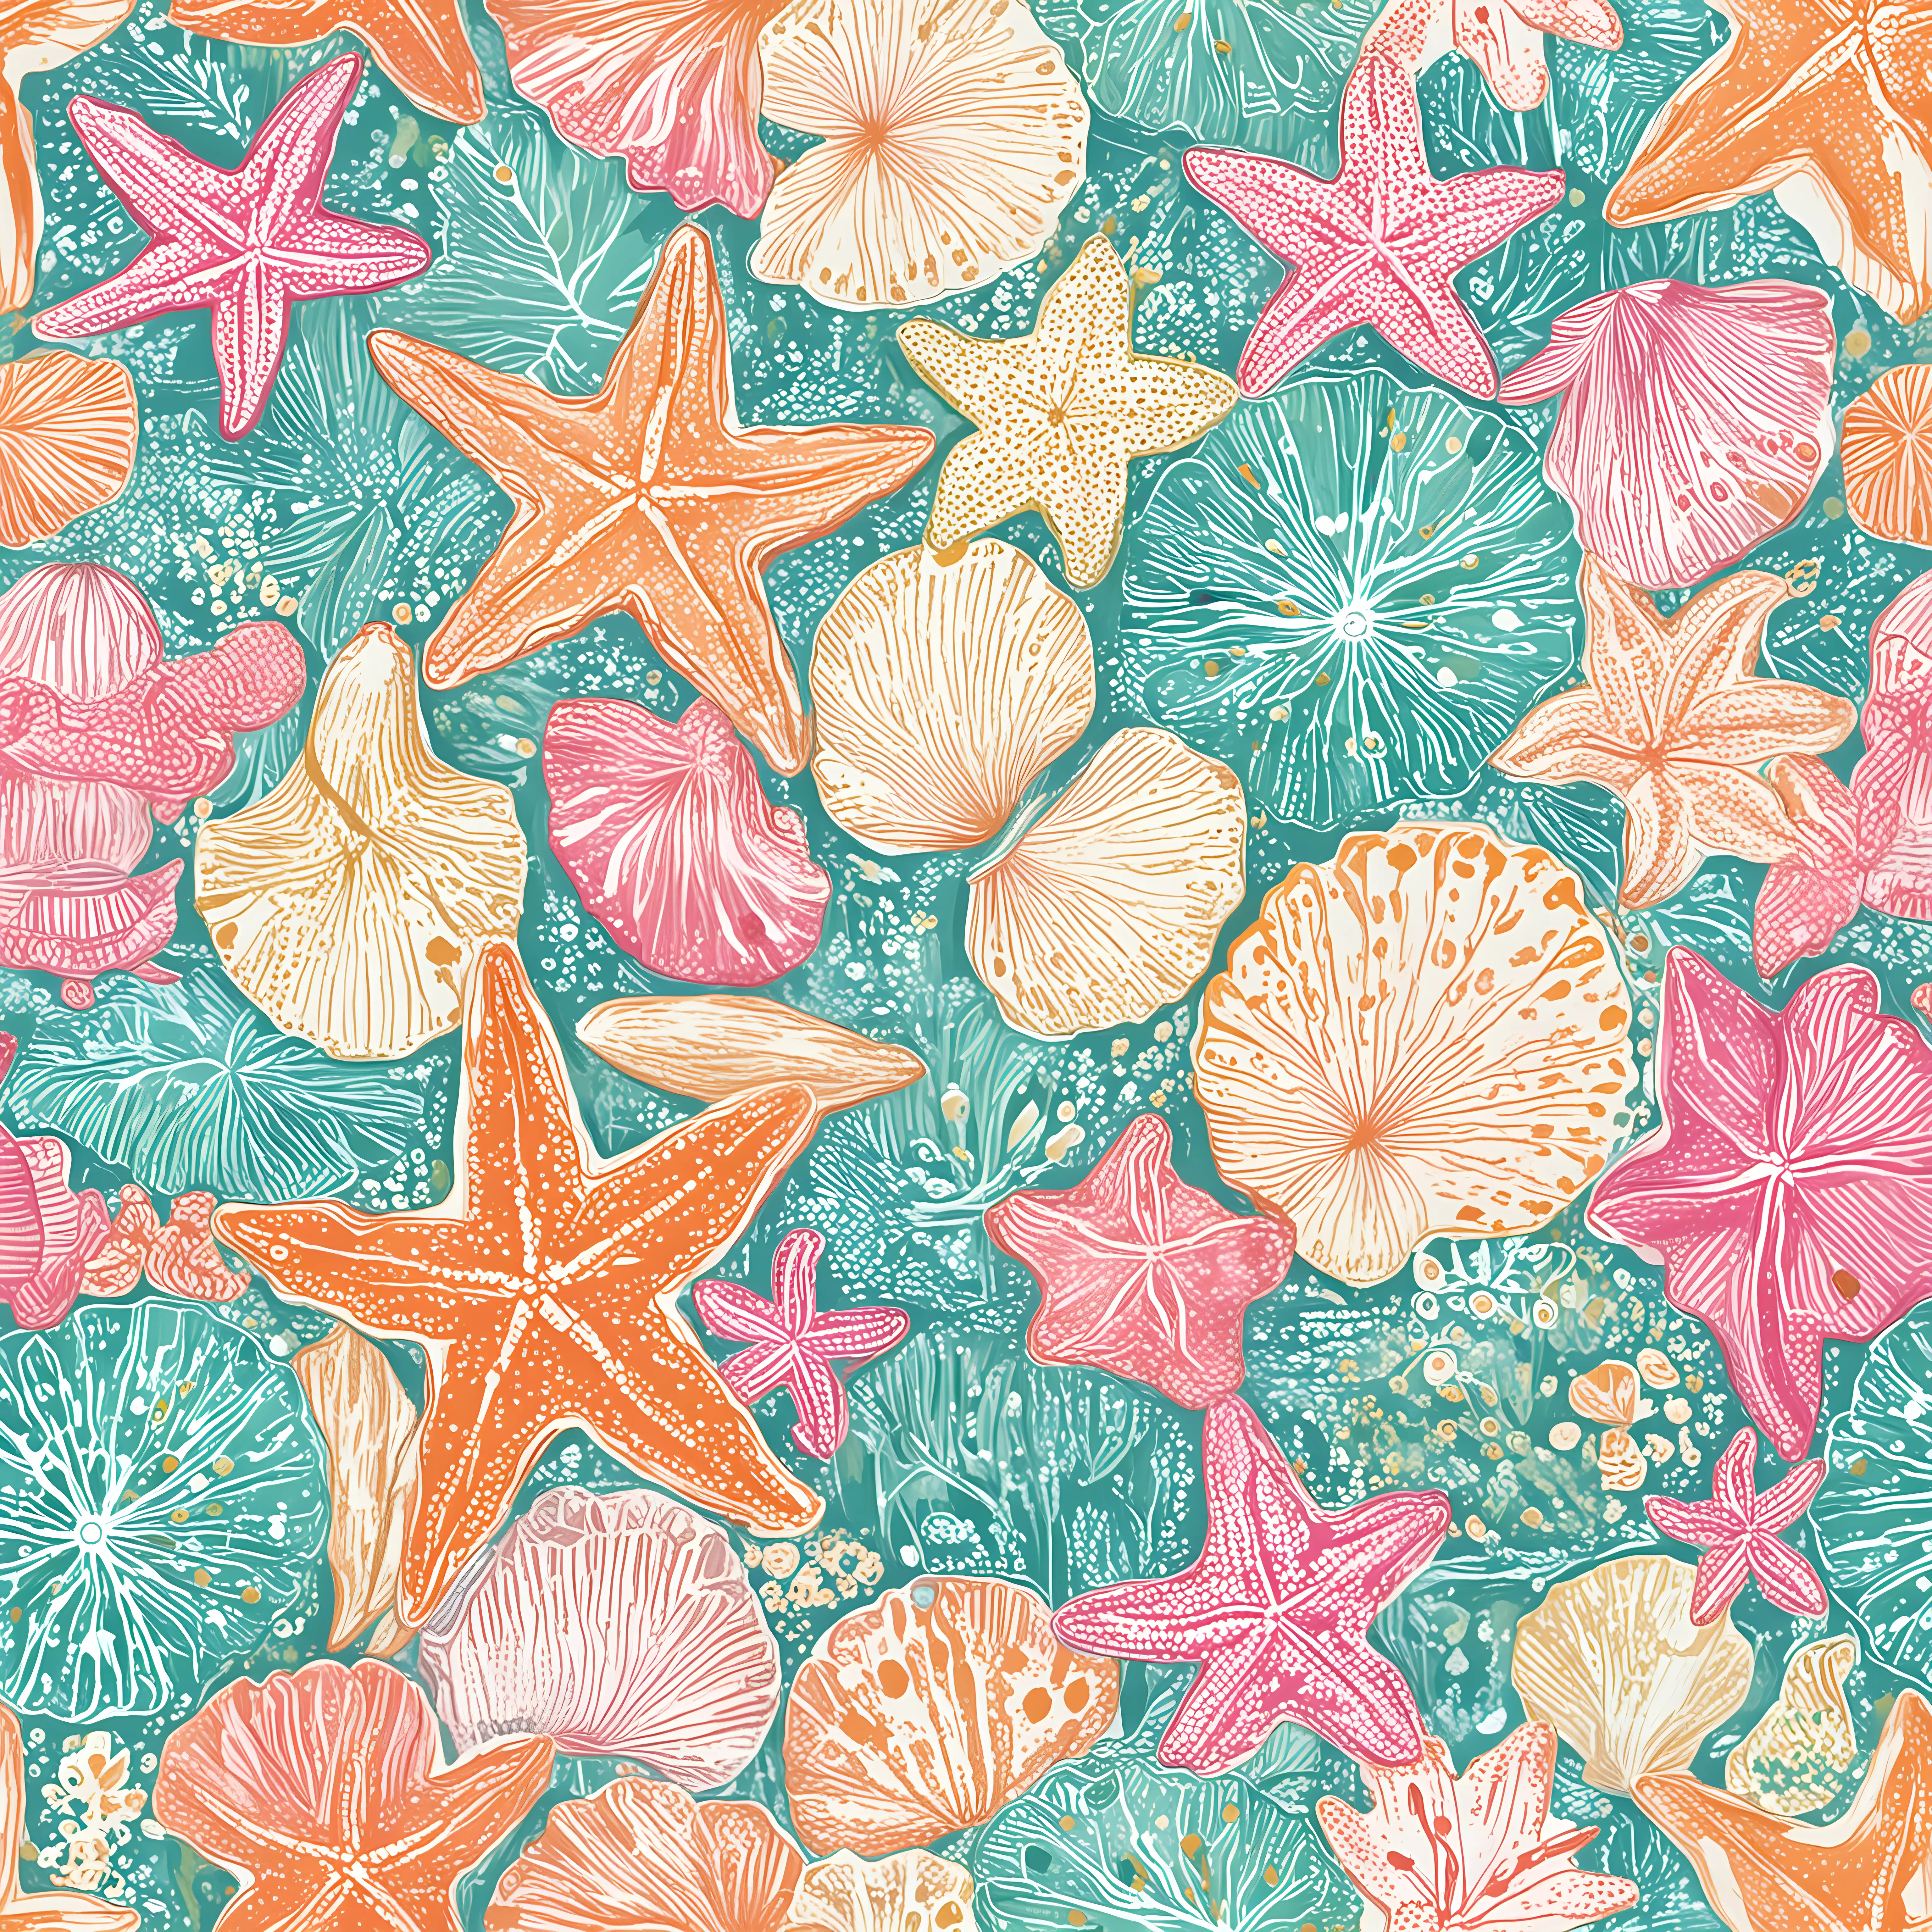 seashells, sand dollar, starfish, scallop shells, bright colors, lily pulitzer style illustration